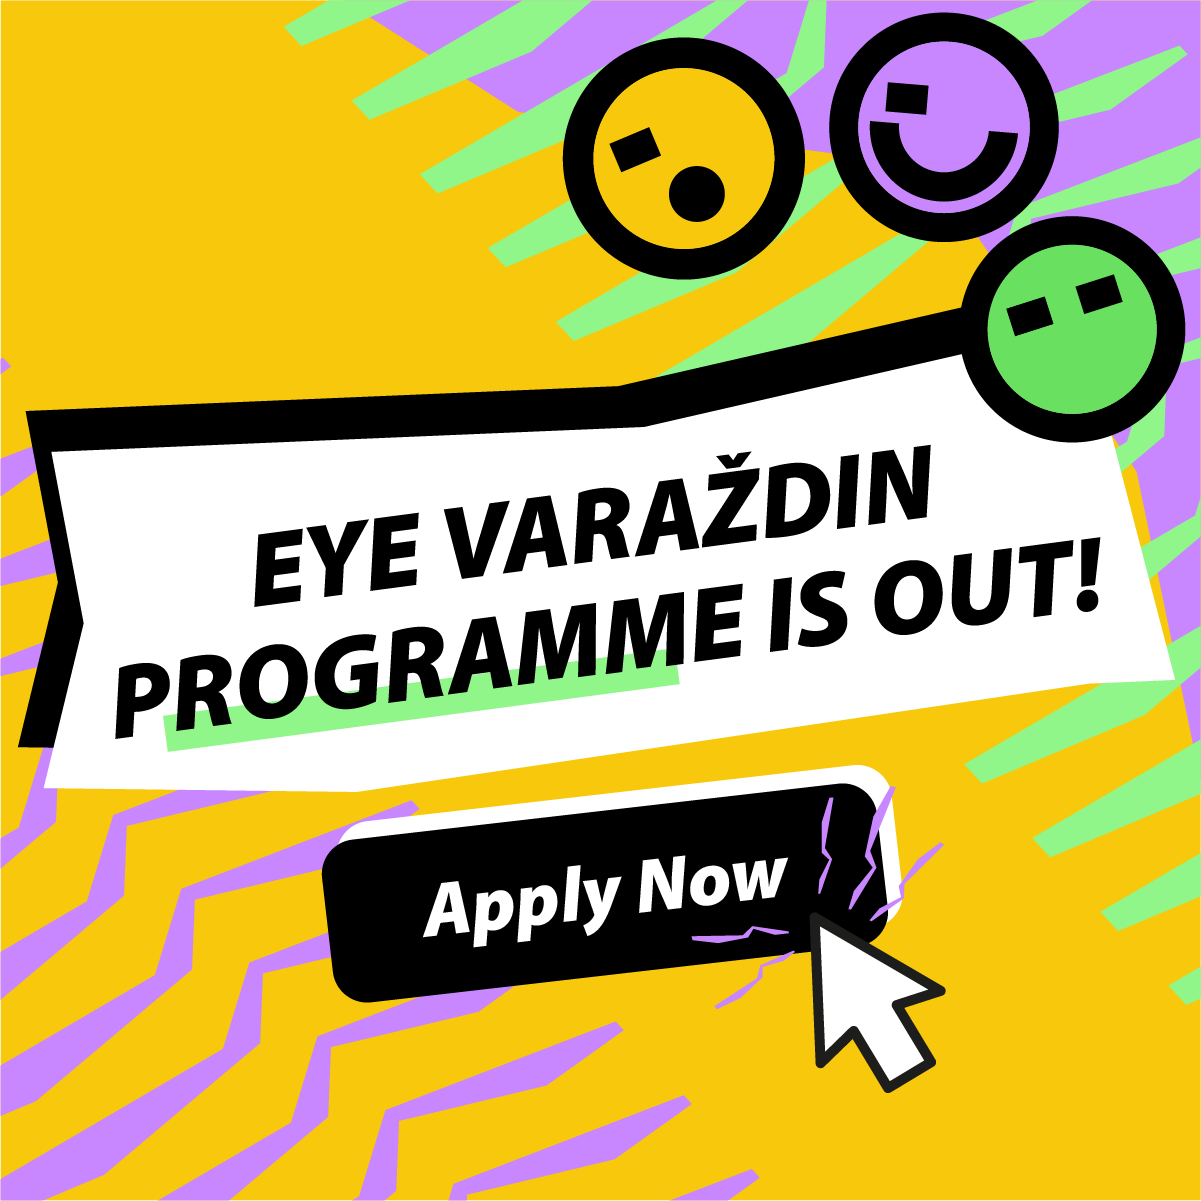 EYE Varaždin programme is out!